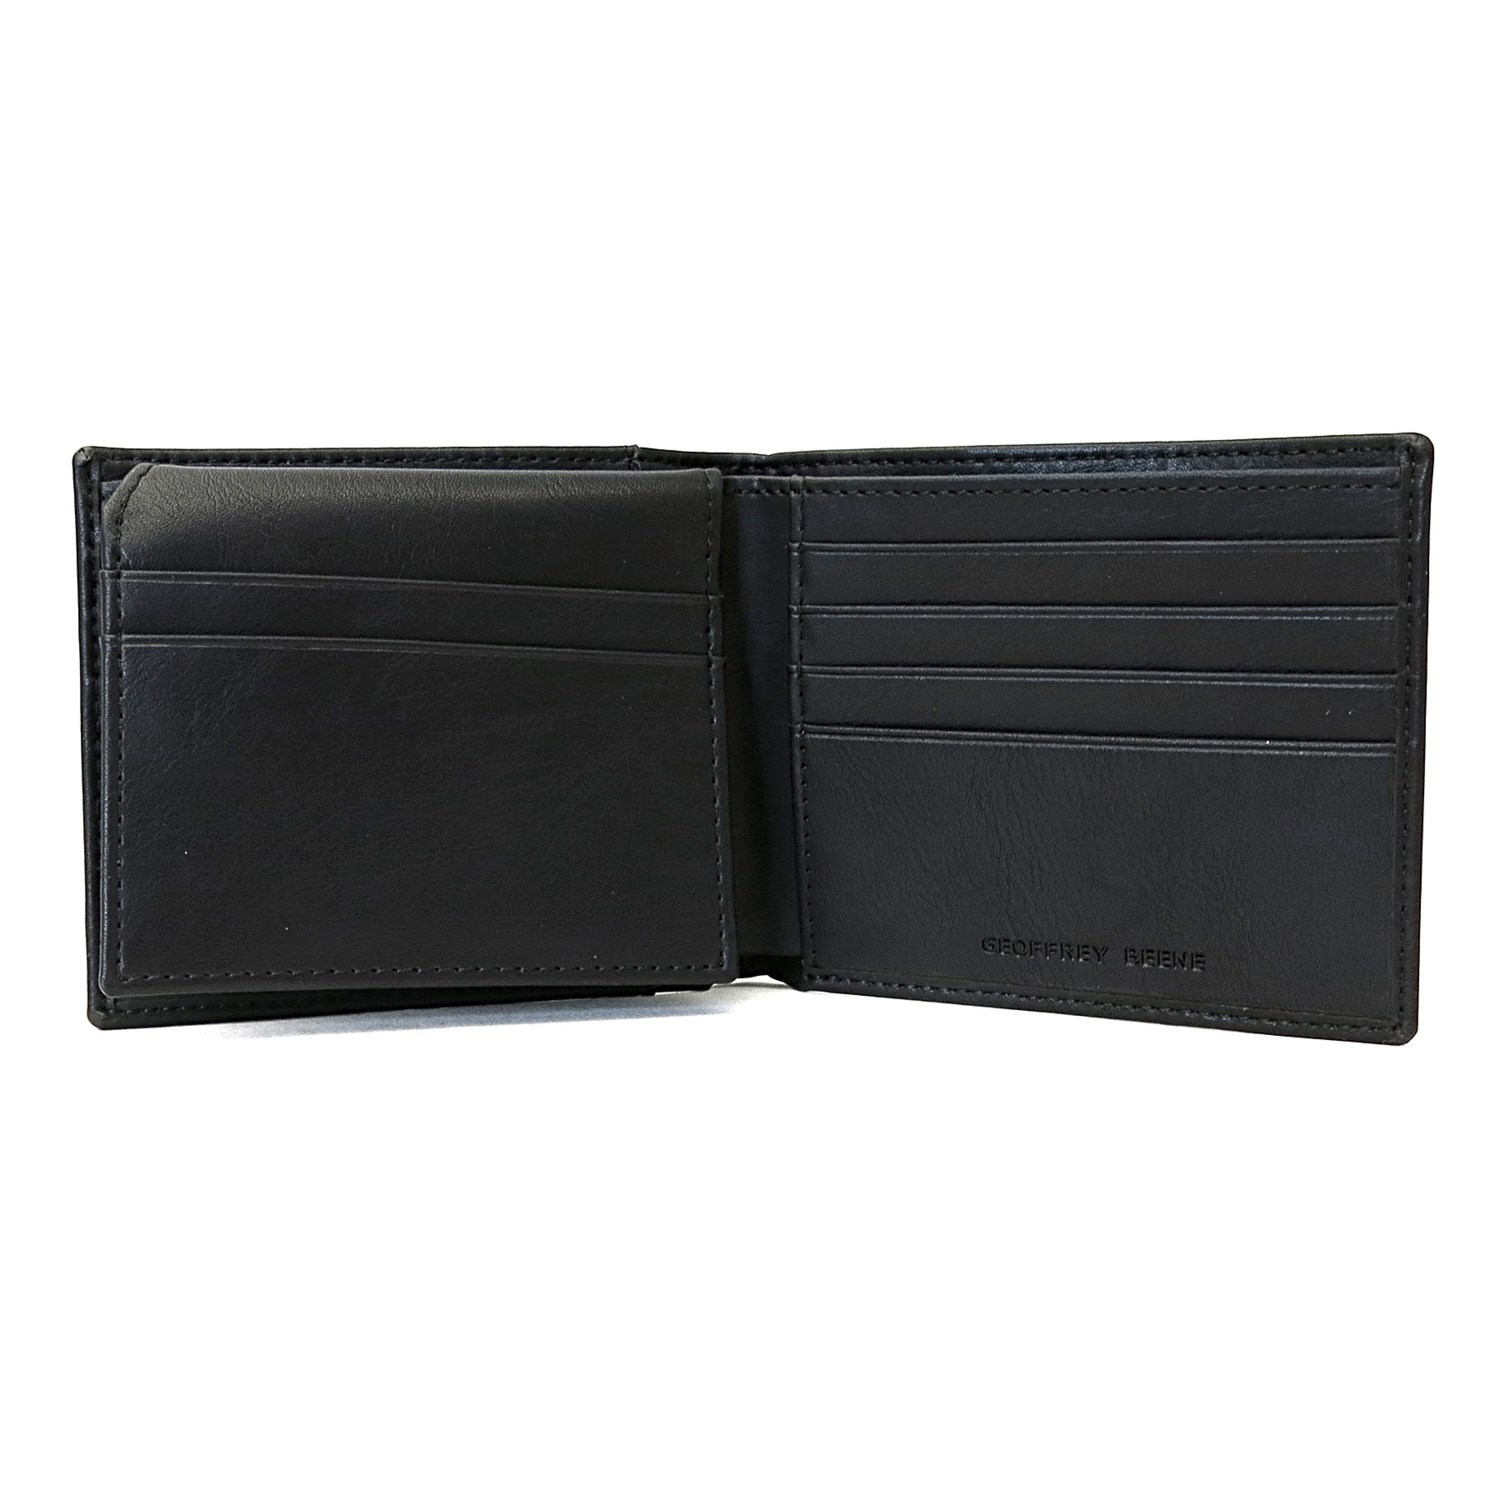 Geoffrey Beene Passcase Wallet - Leather - Save 70%